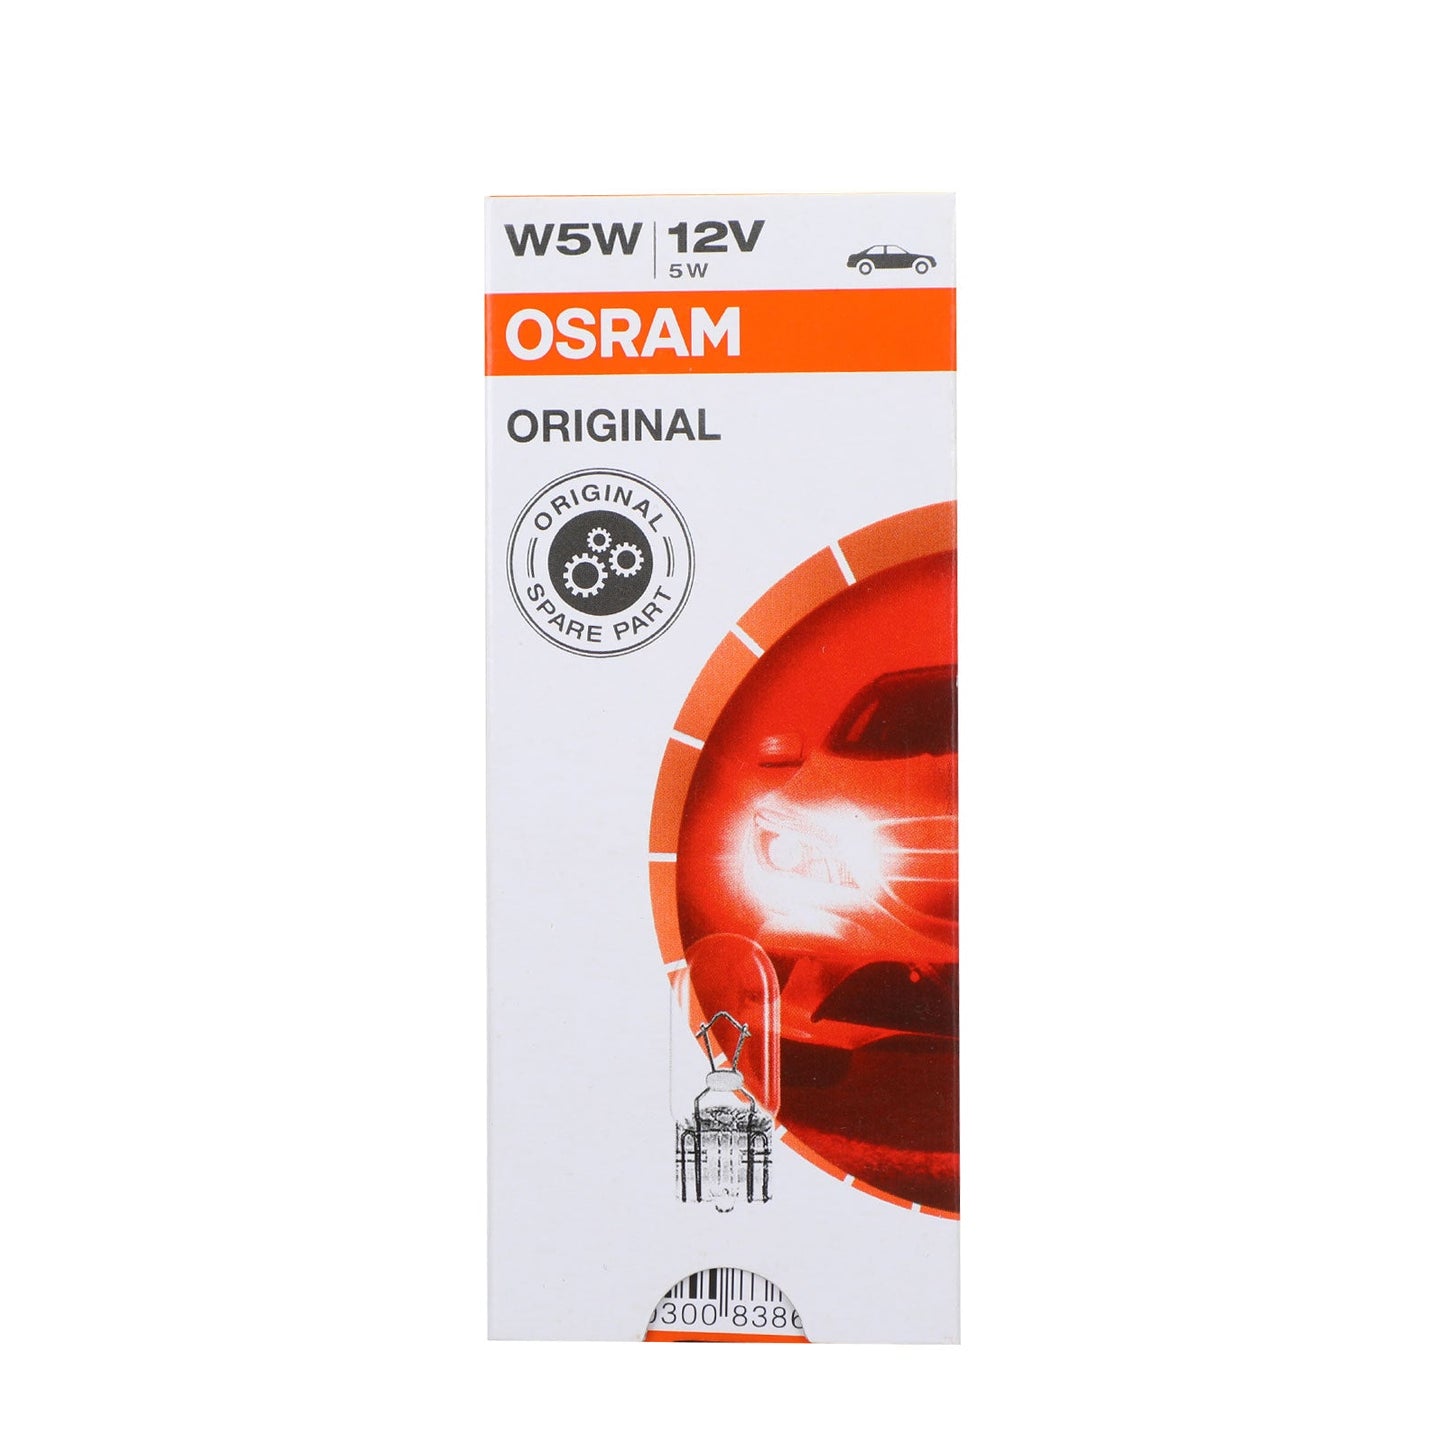 10x For OSRAM General Lighting Halogen Auxiliary Light W5W 12V W2.1*9.5d